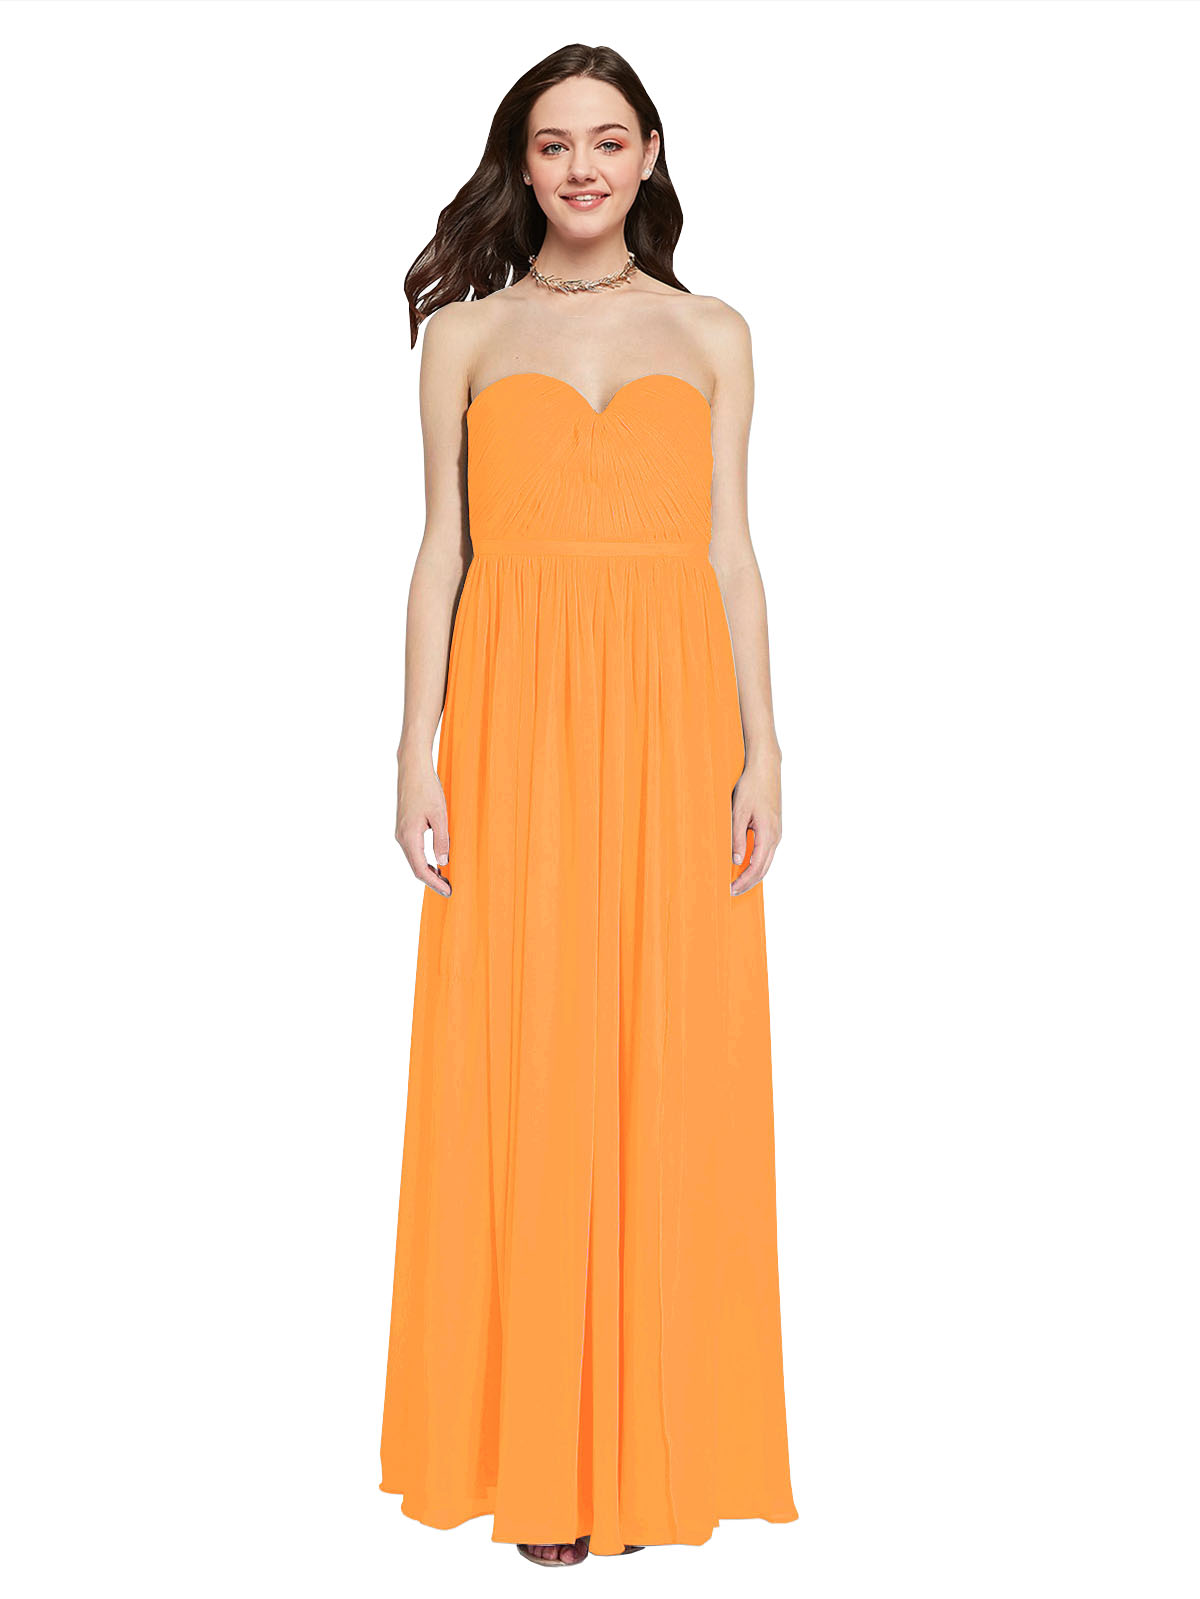 Long A-Line Sweetheart Sleeveless Orange Chiffon Bridesmaid Dress Ali